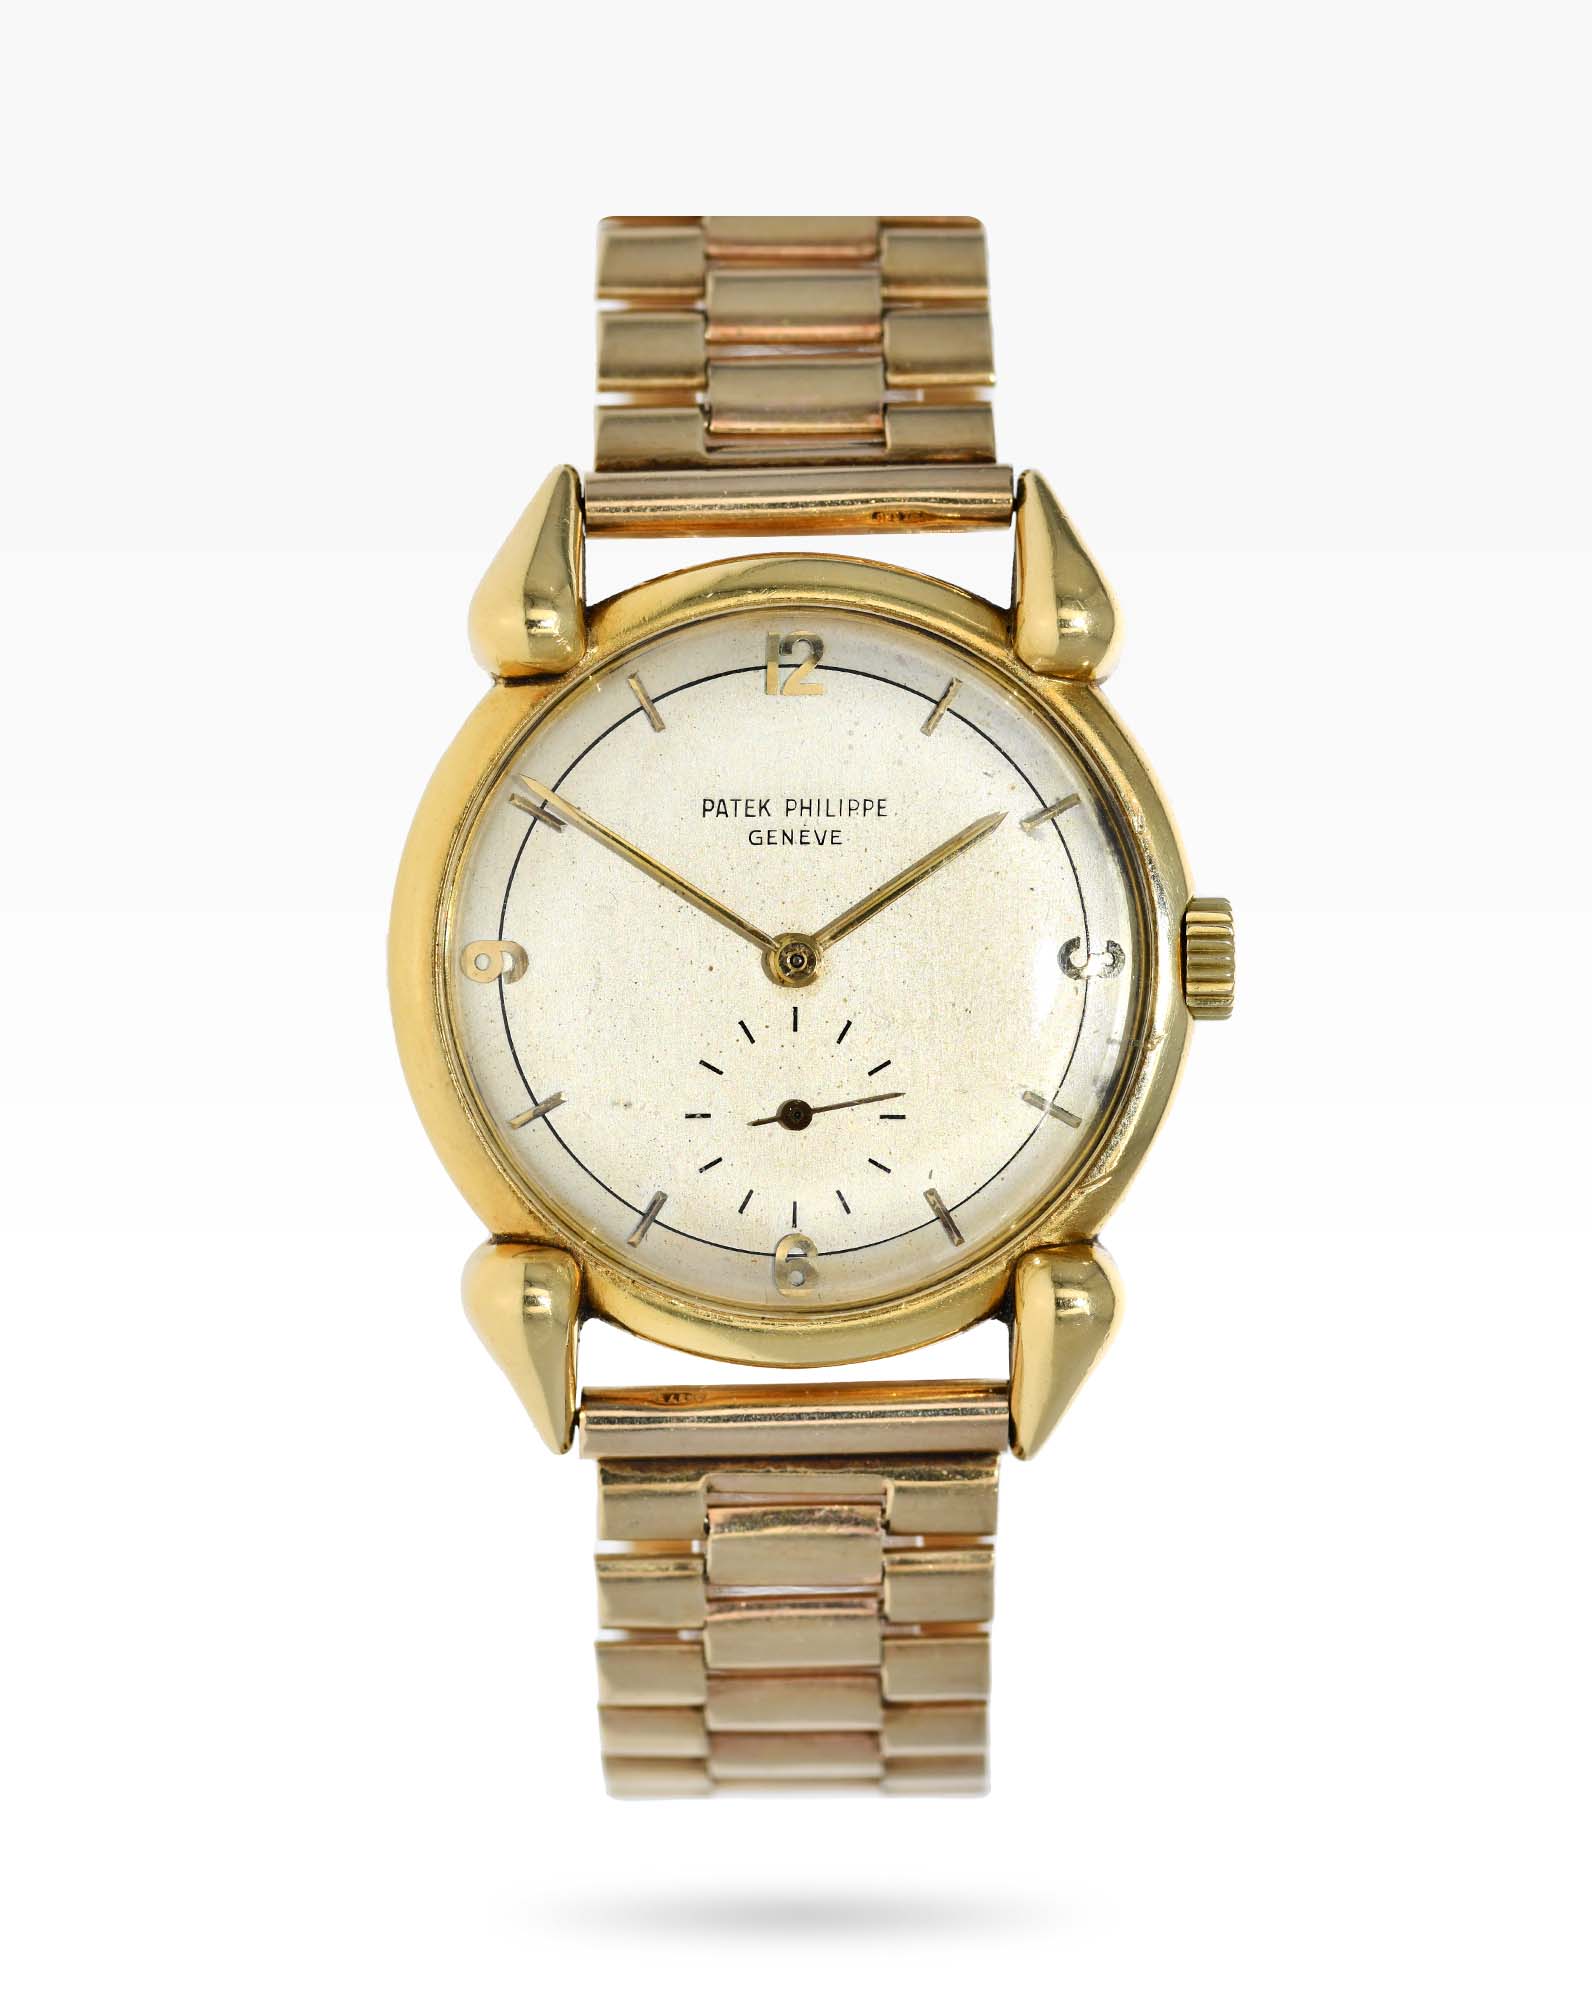 Patek Philippe Calatrava Ref.2432J Bracelet Watch from the 1950s - 2ToneVintage Watches